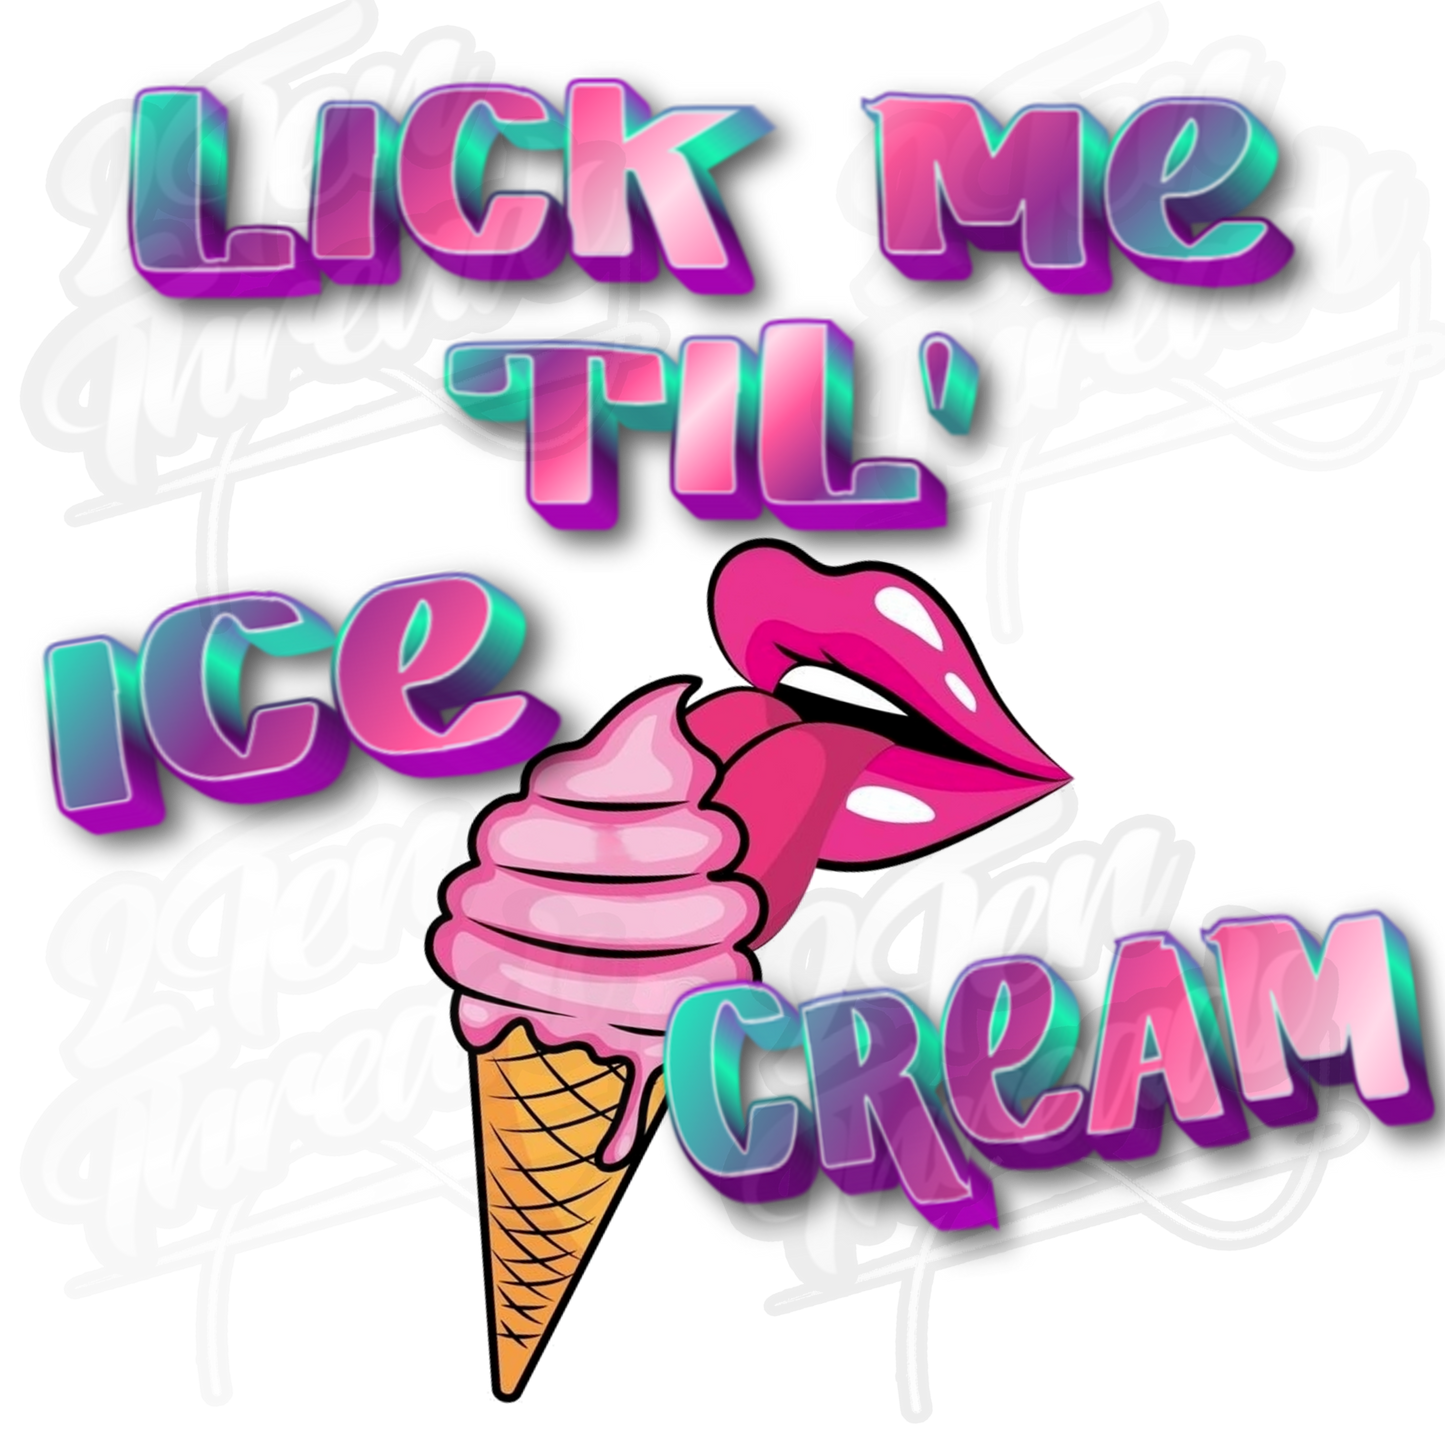 Ice Cream Lick!